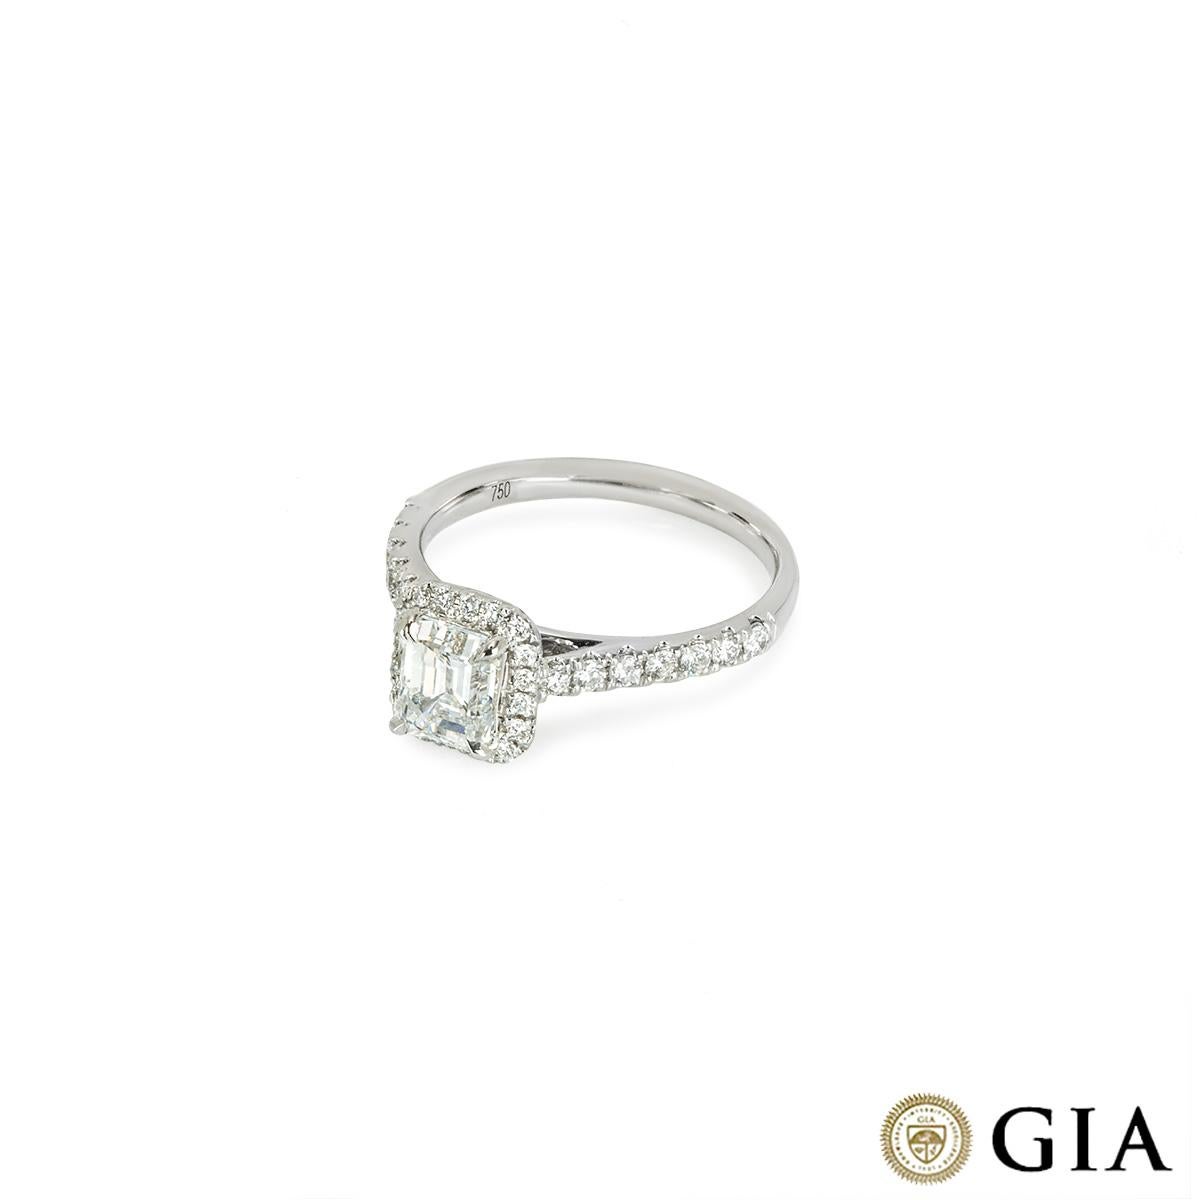 Women's GIA Certified White Gold Emerald Cut Diamond Ring 1.08 Carat F/VS1 For Sale